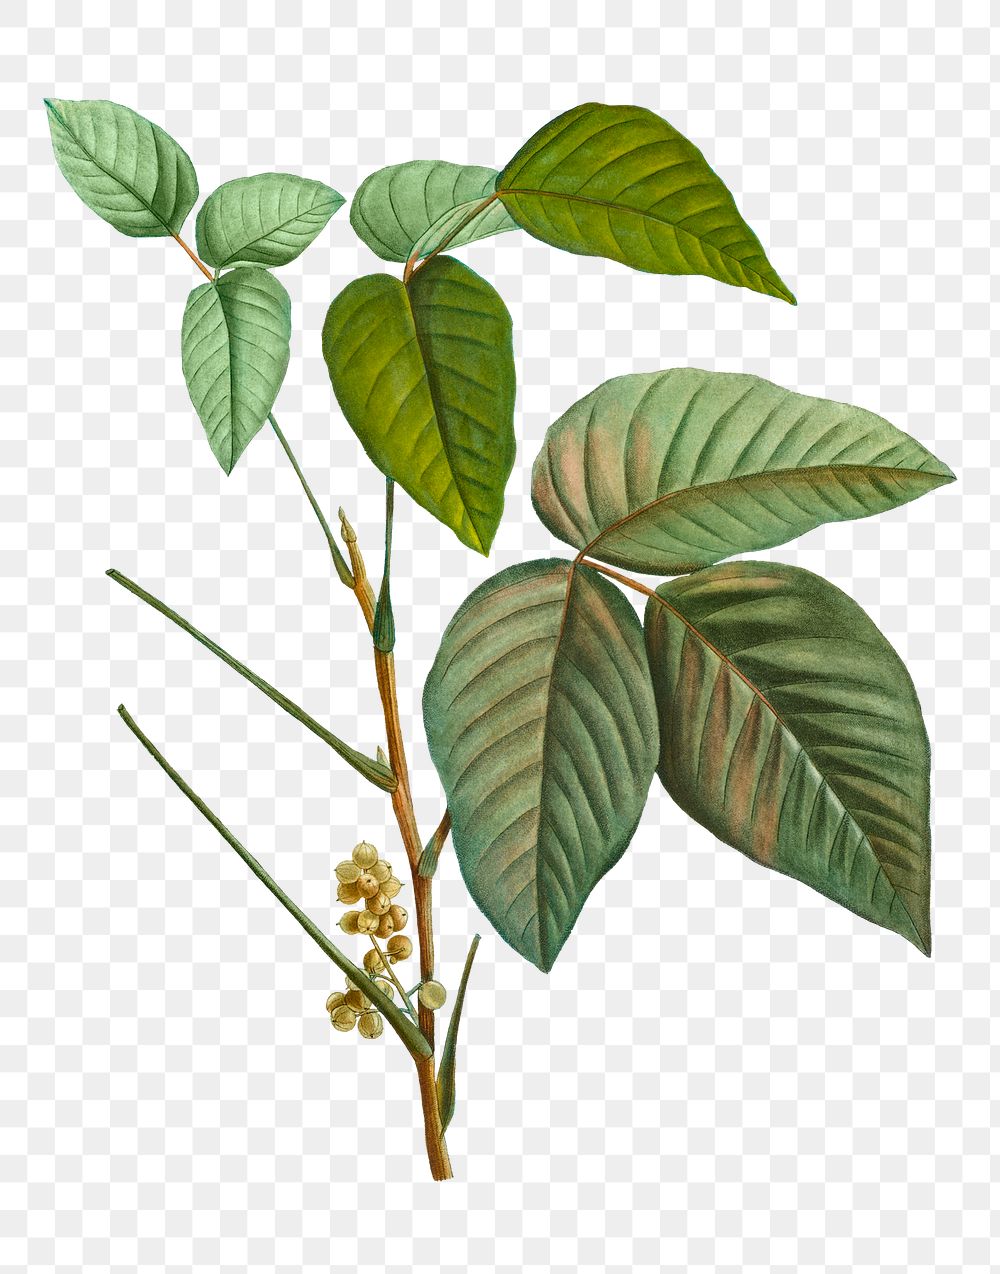 Poison ivy leaves transparent png